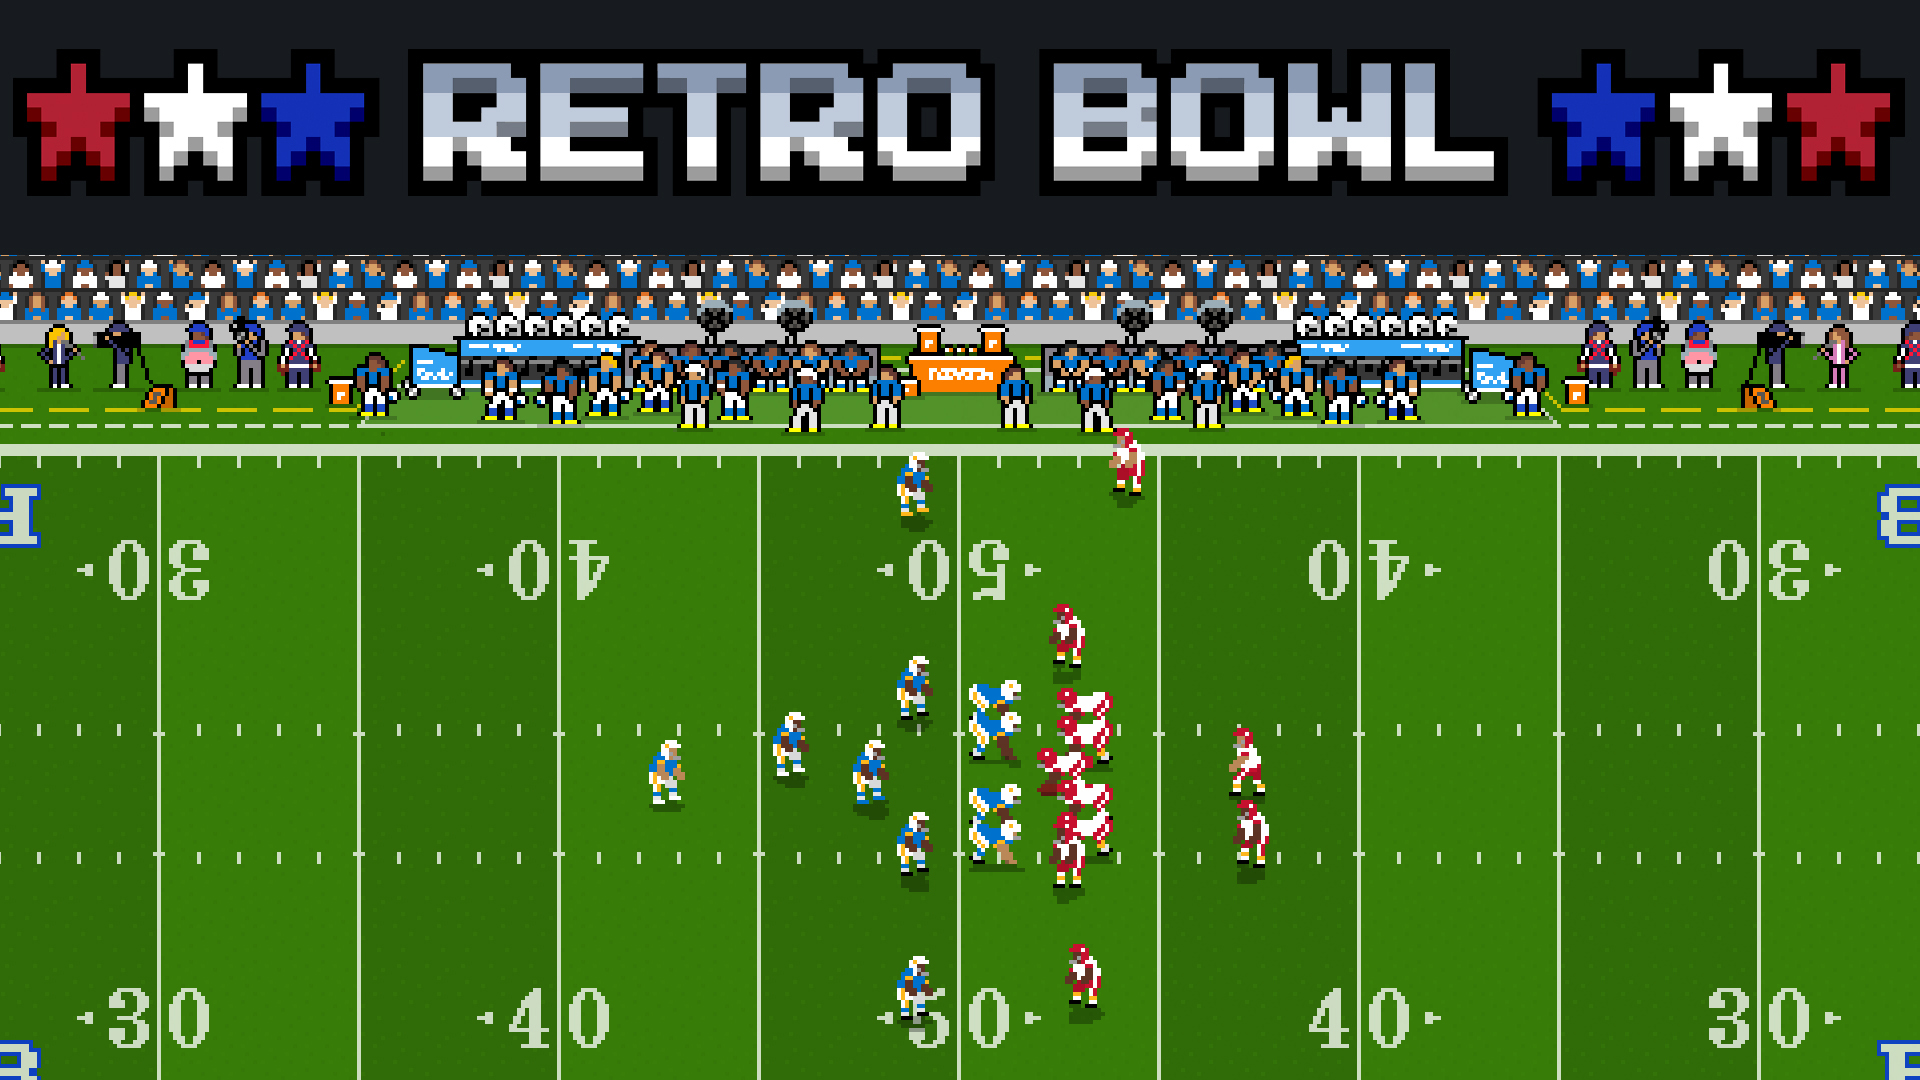 Retro Bowl offers topnotch football action with a retro flair